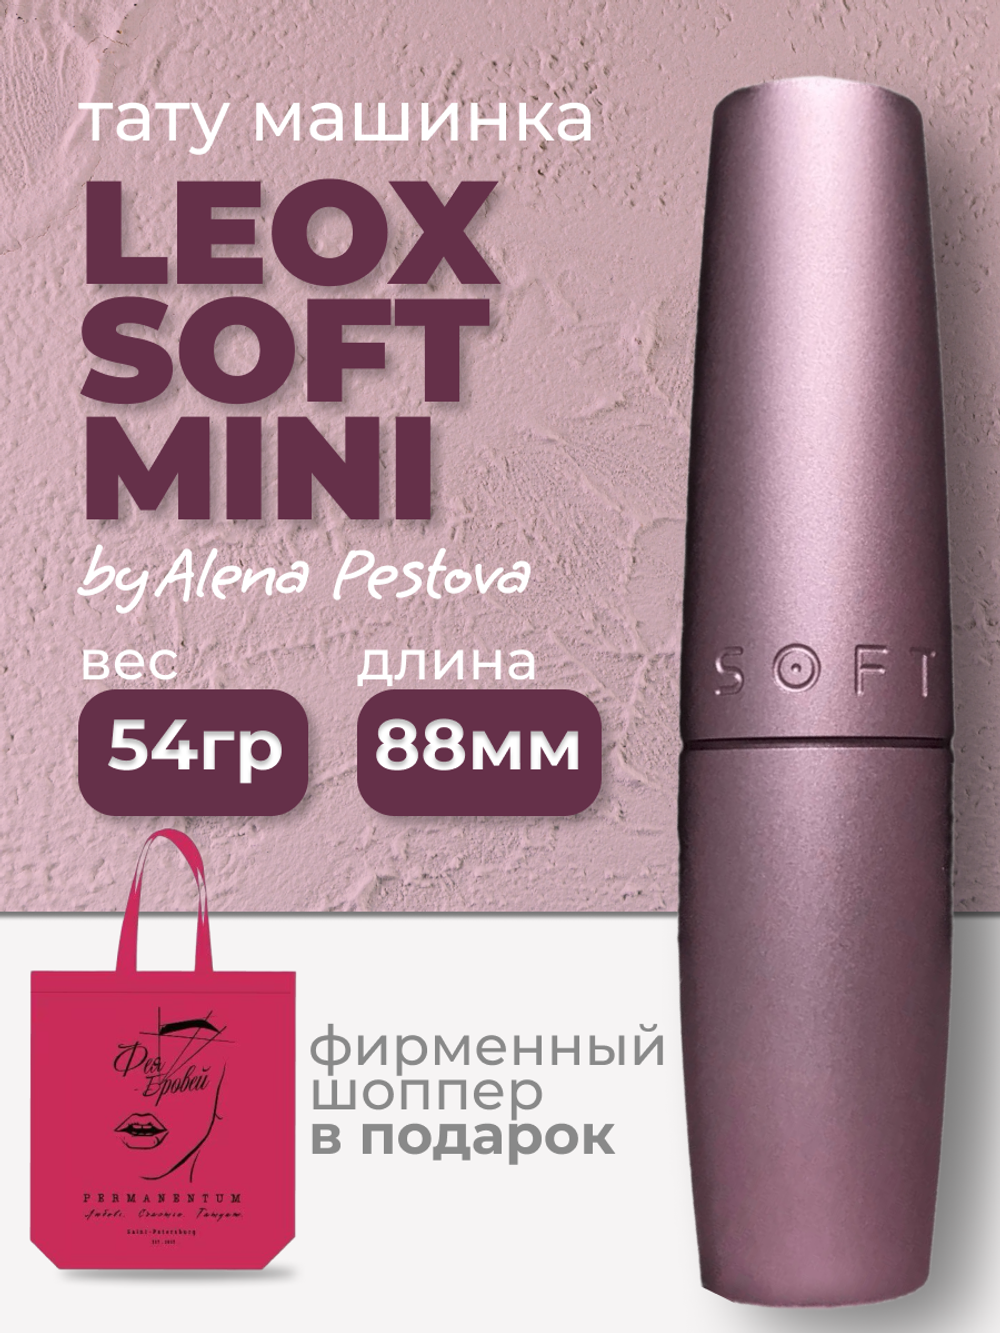 Аппарат для татуажа Leox Soft Mini prod. Алена Пестова